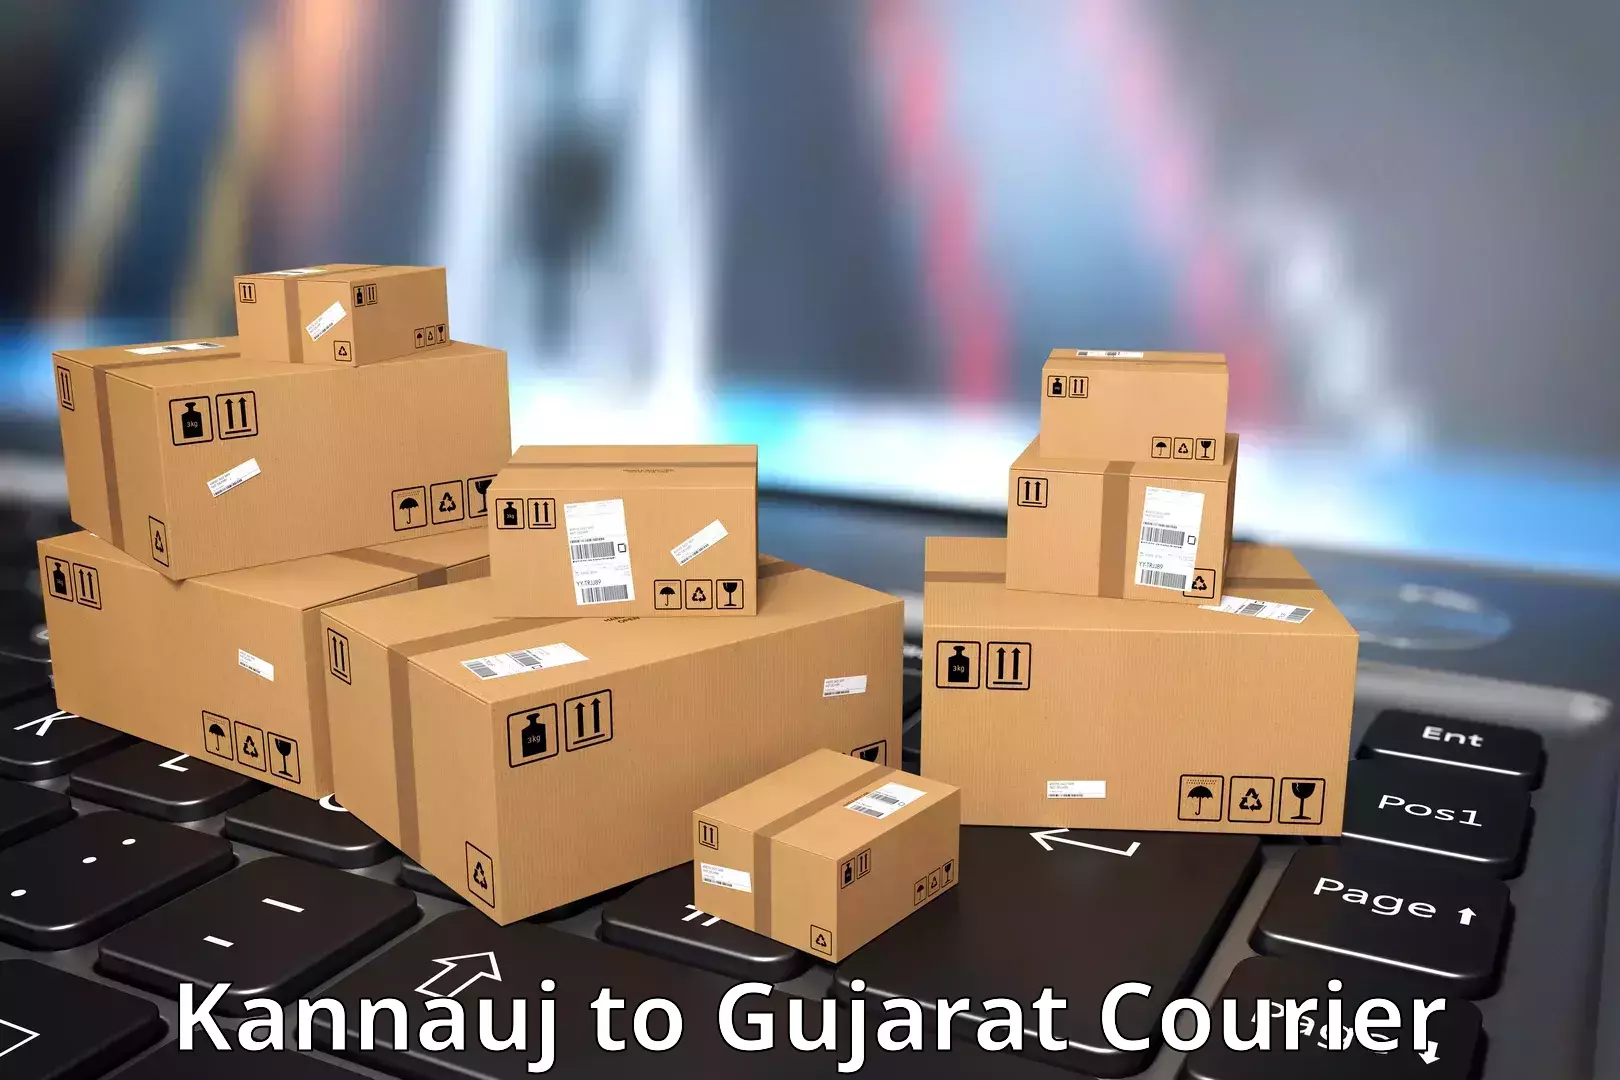 Courier service comparison Kannauj to Gujarat